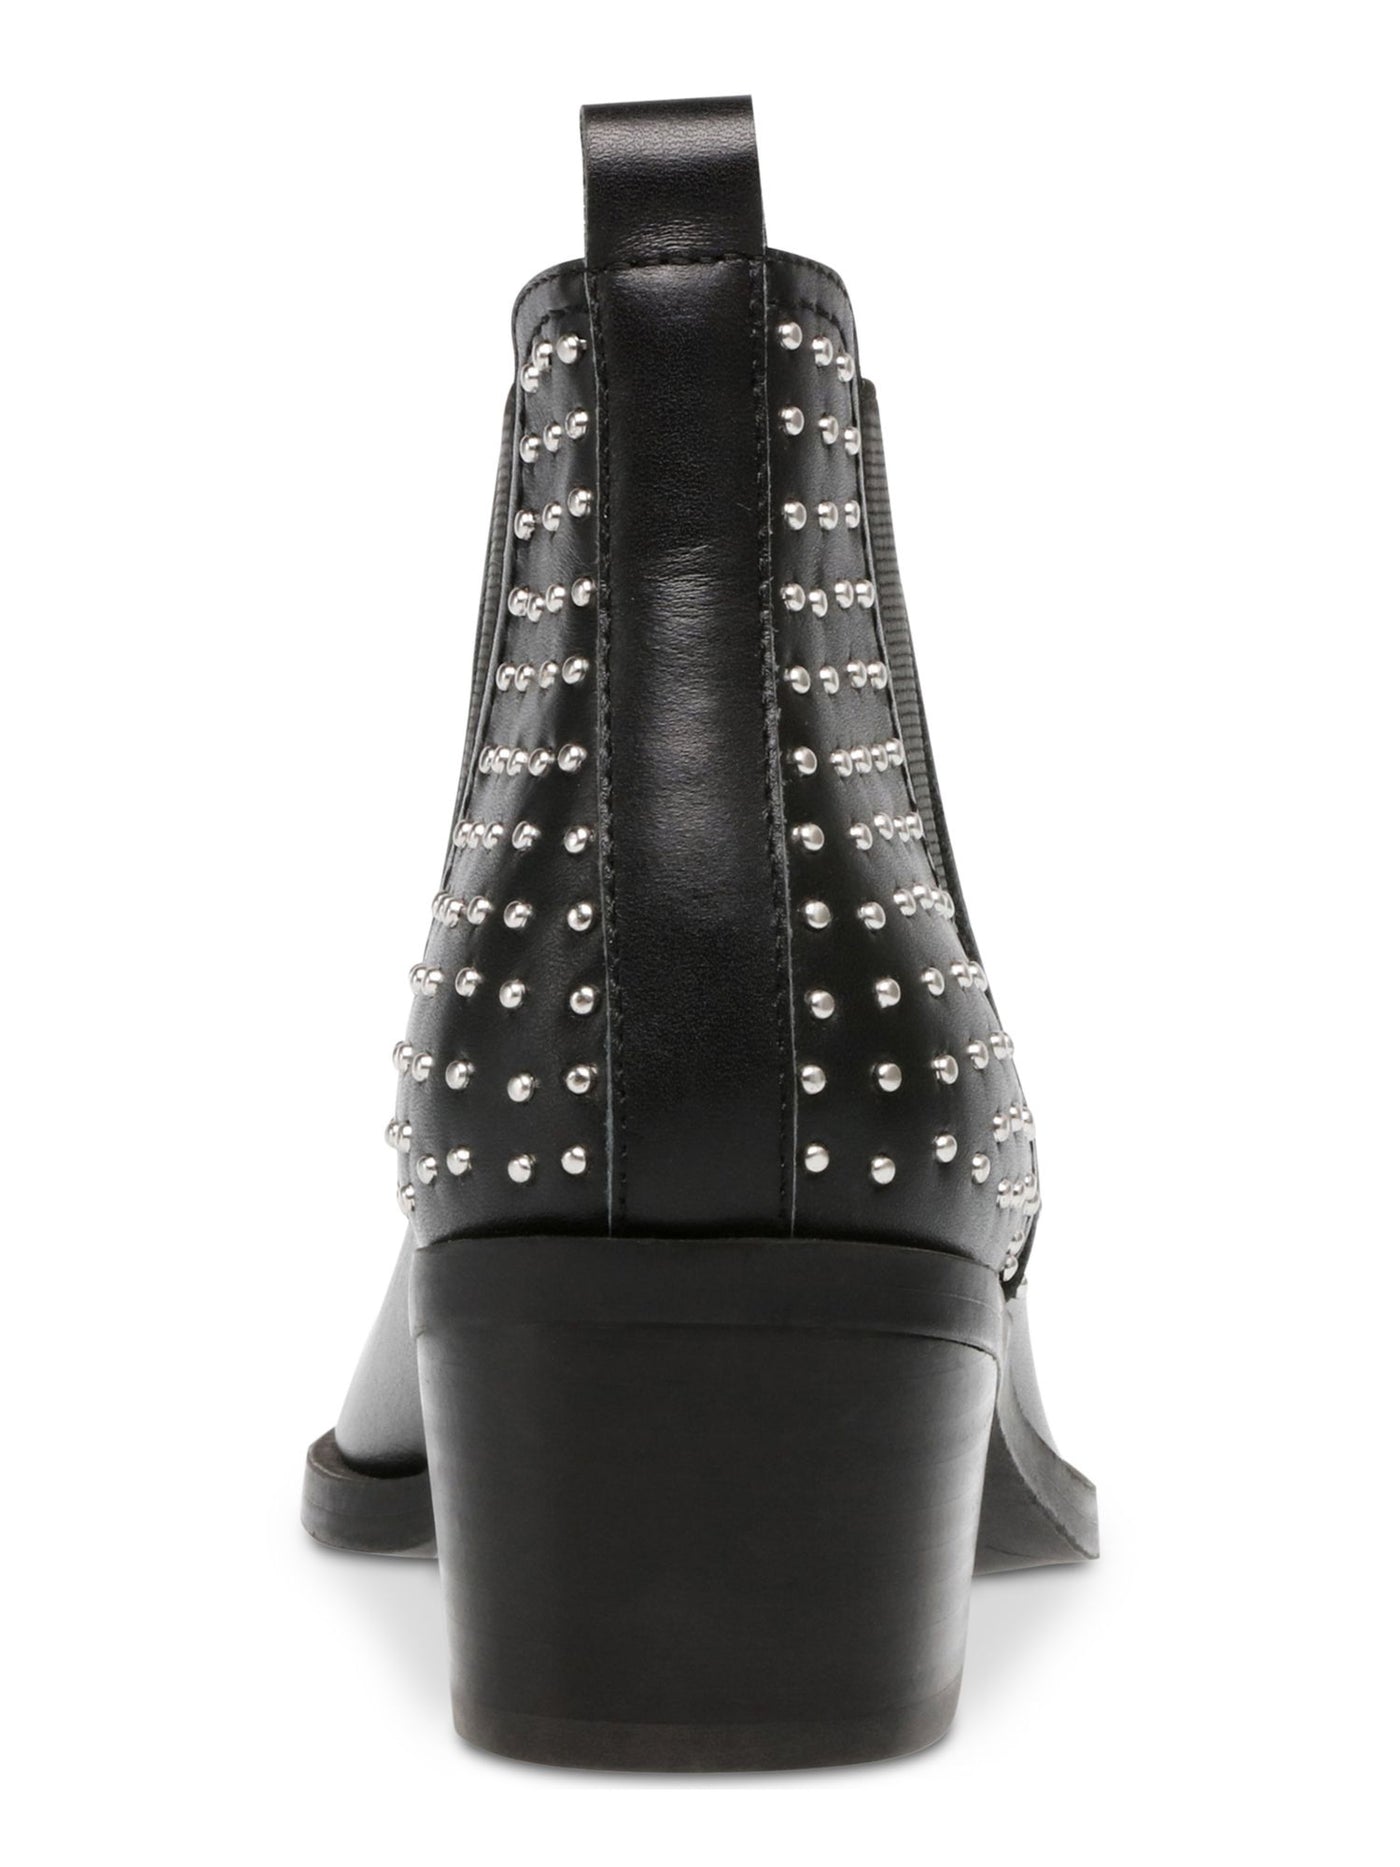 DOLCE VITA Womens Black Dual Goring Studded Zendra Pointed Toe Block Heel Leather Booties 5.5 M